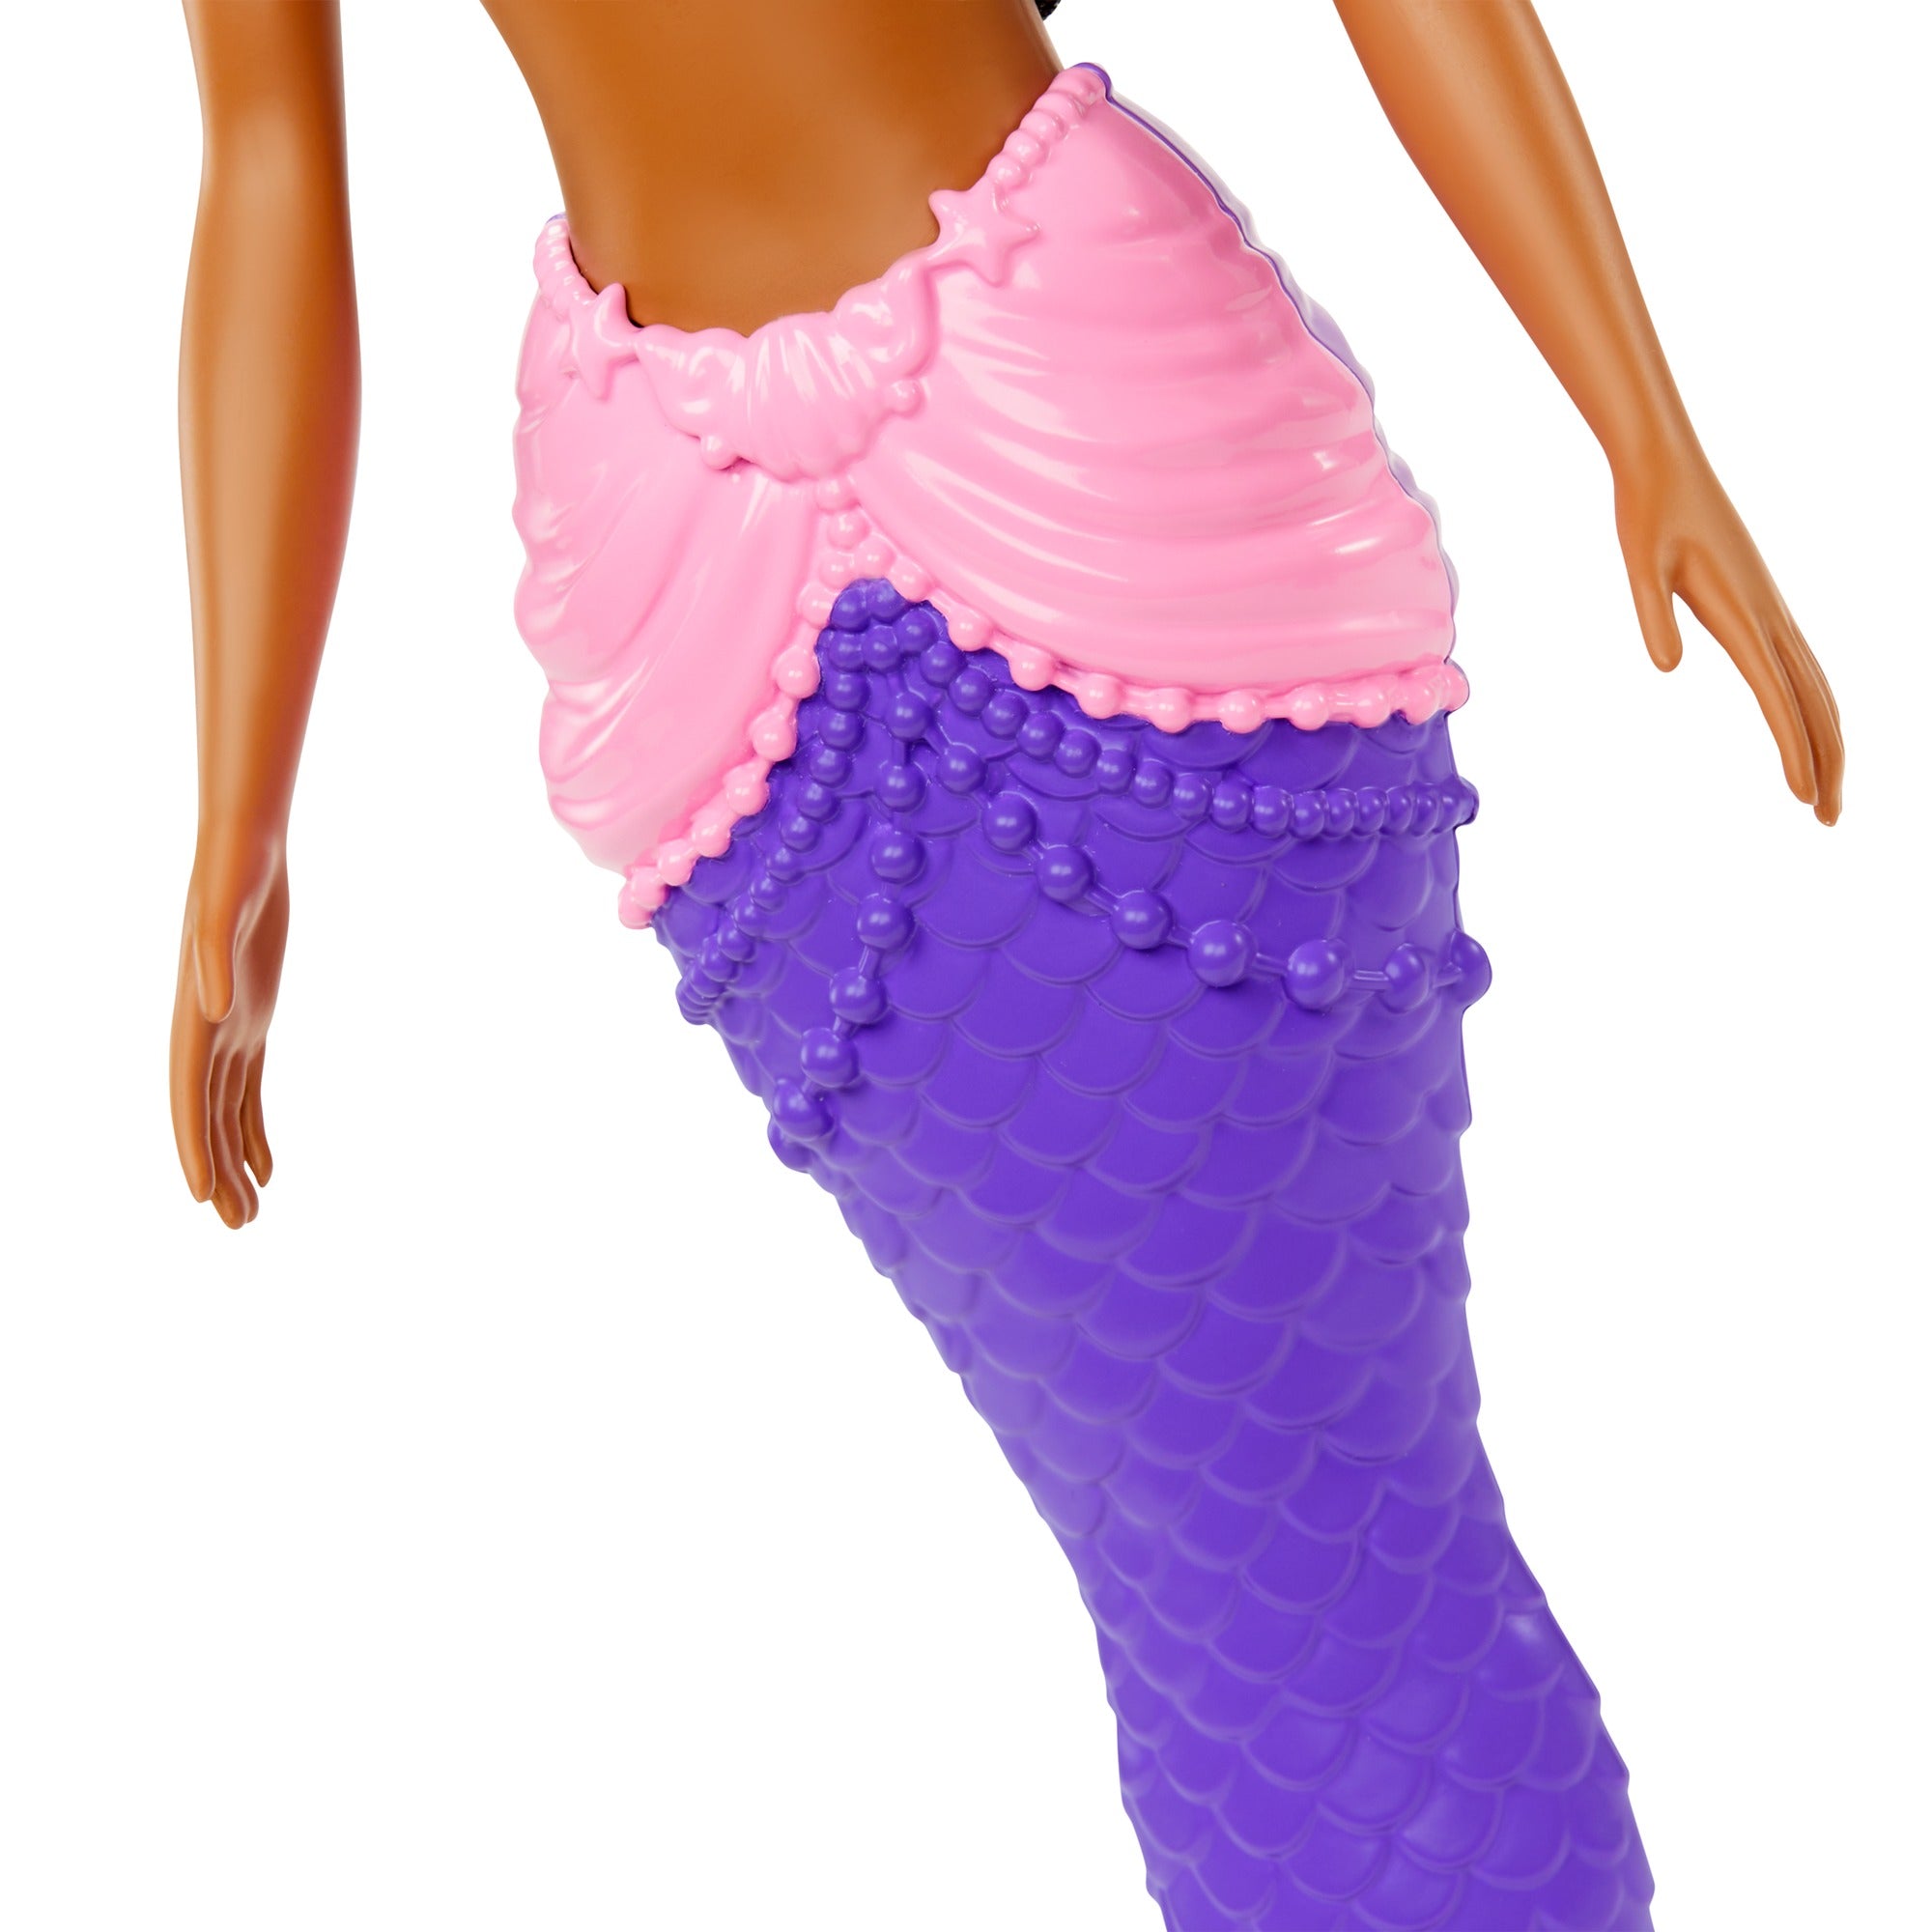 Barbie Dreamtopia Black Hair Mermaid Doll With Multi-Colored Purple Mermaid Tail for Kids Ages 3+